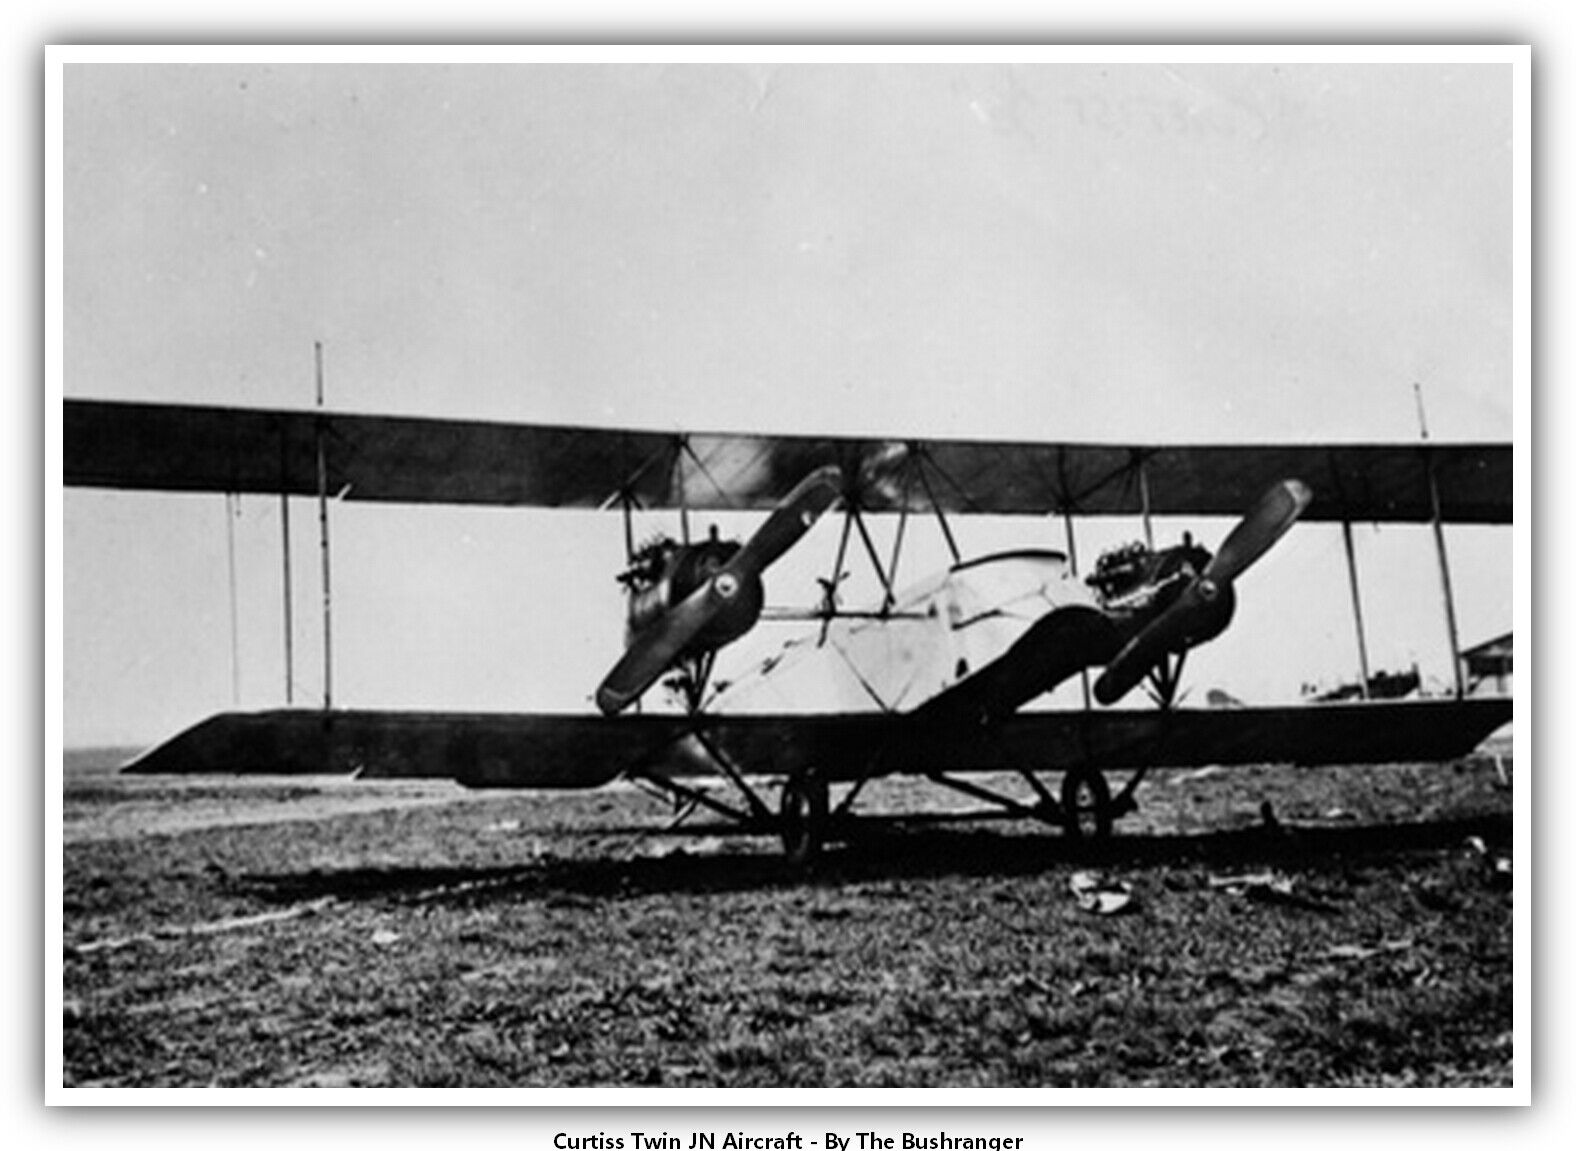 Curtiss Twin JN Aircraft